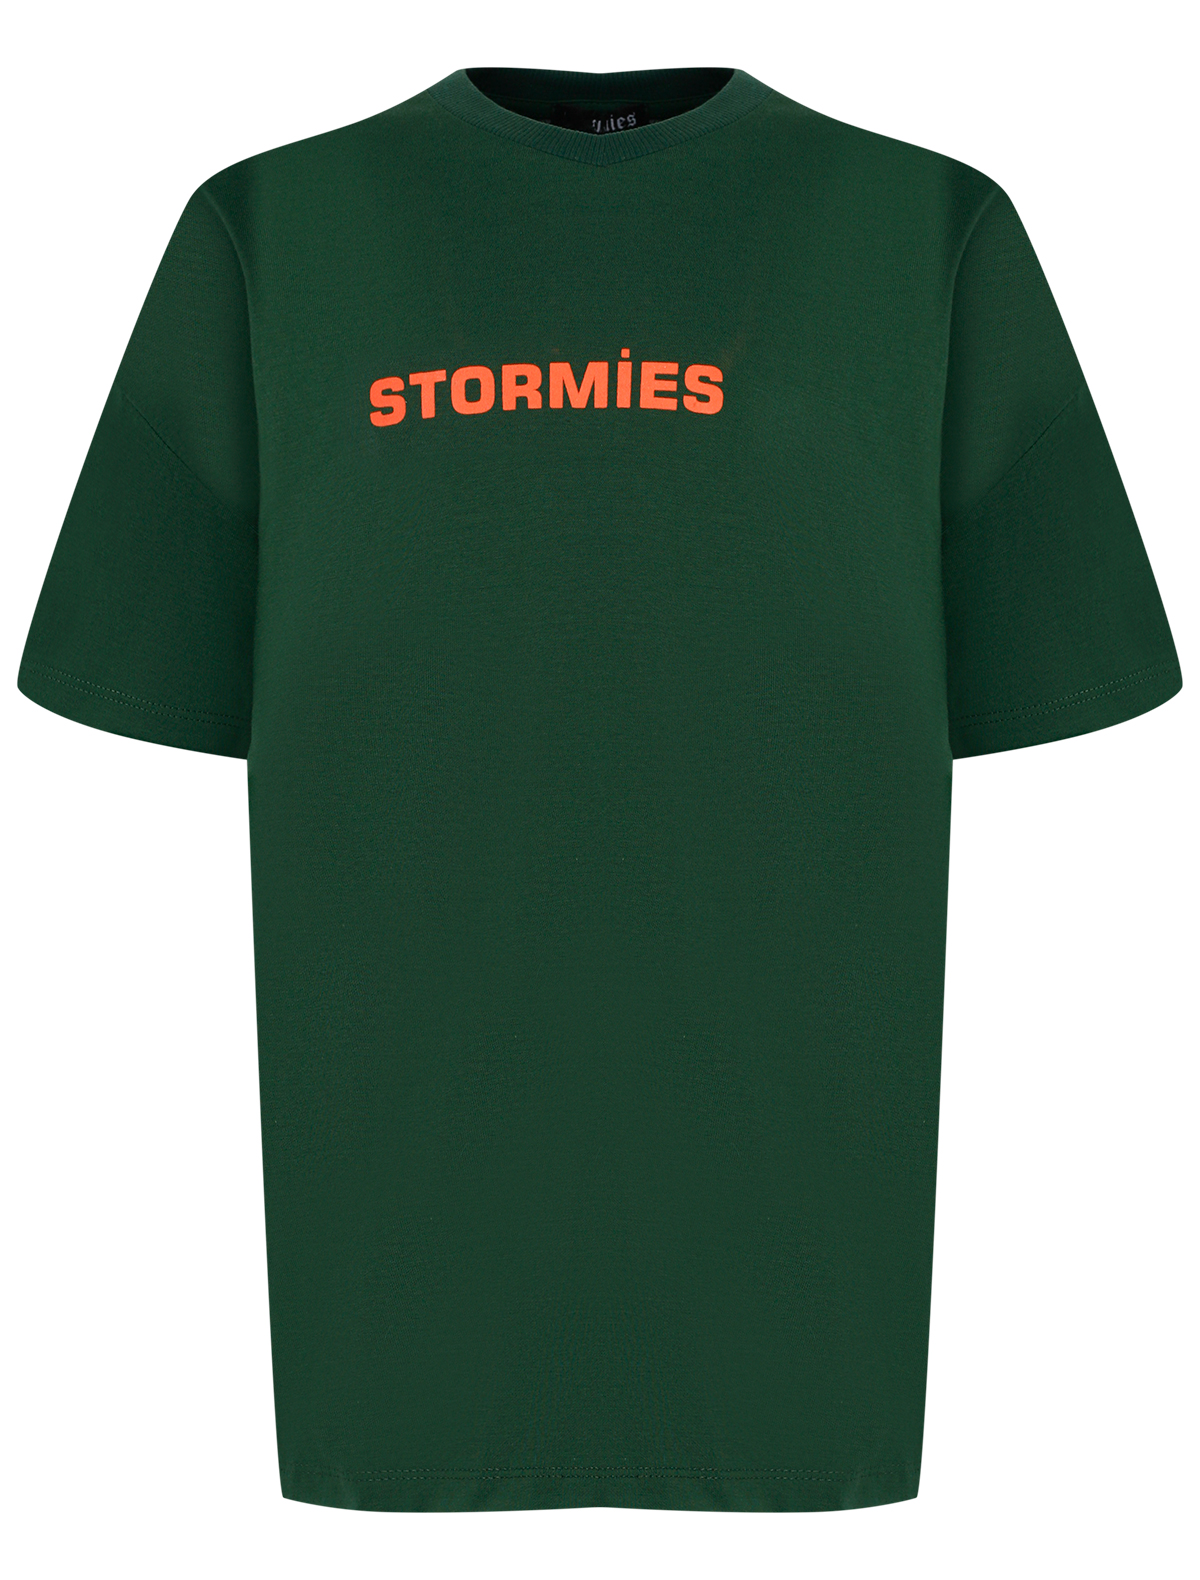 Футболка Stormies 2615491, цвет зеленый, размер 9